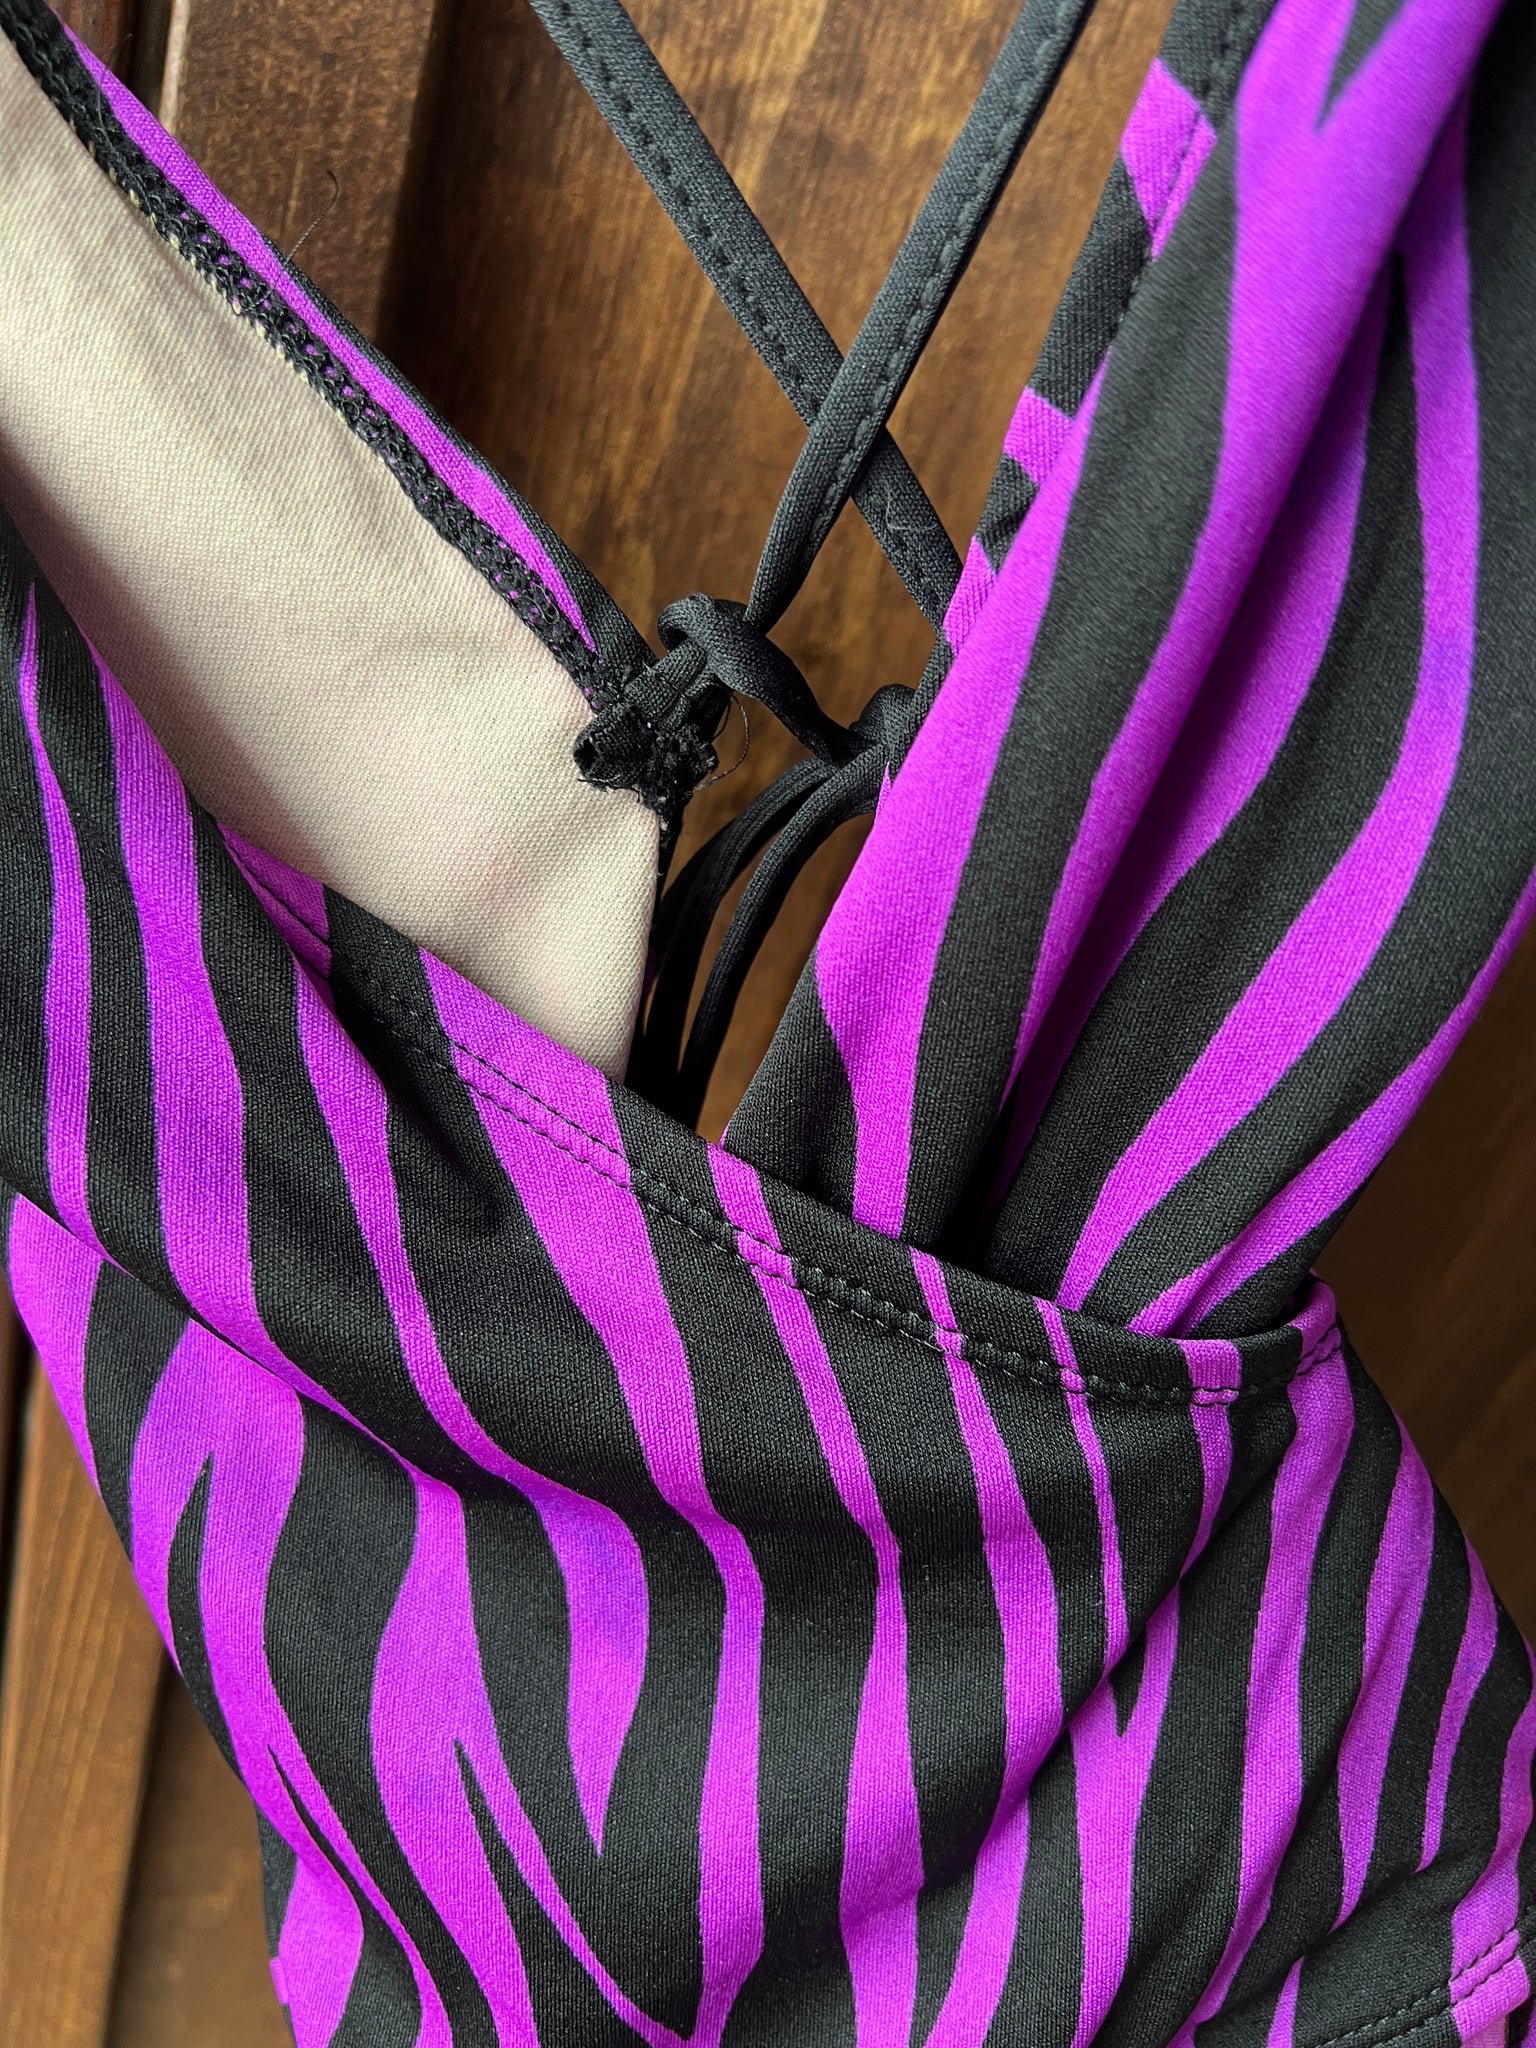 1980s BATHING SUIT- Eve purple zebra print